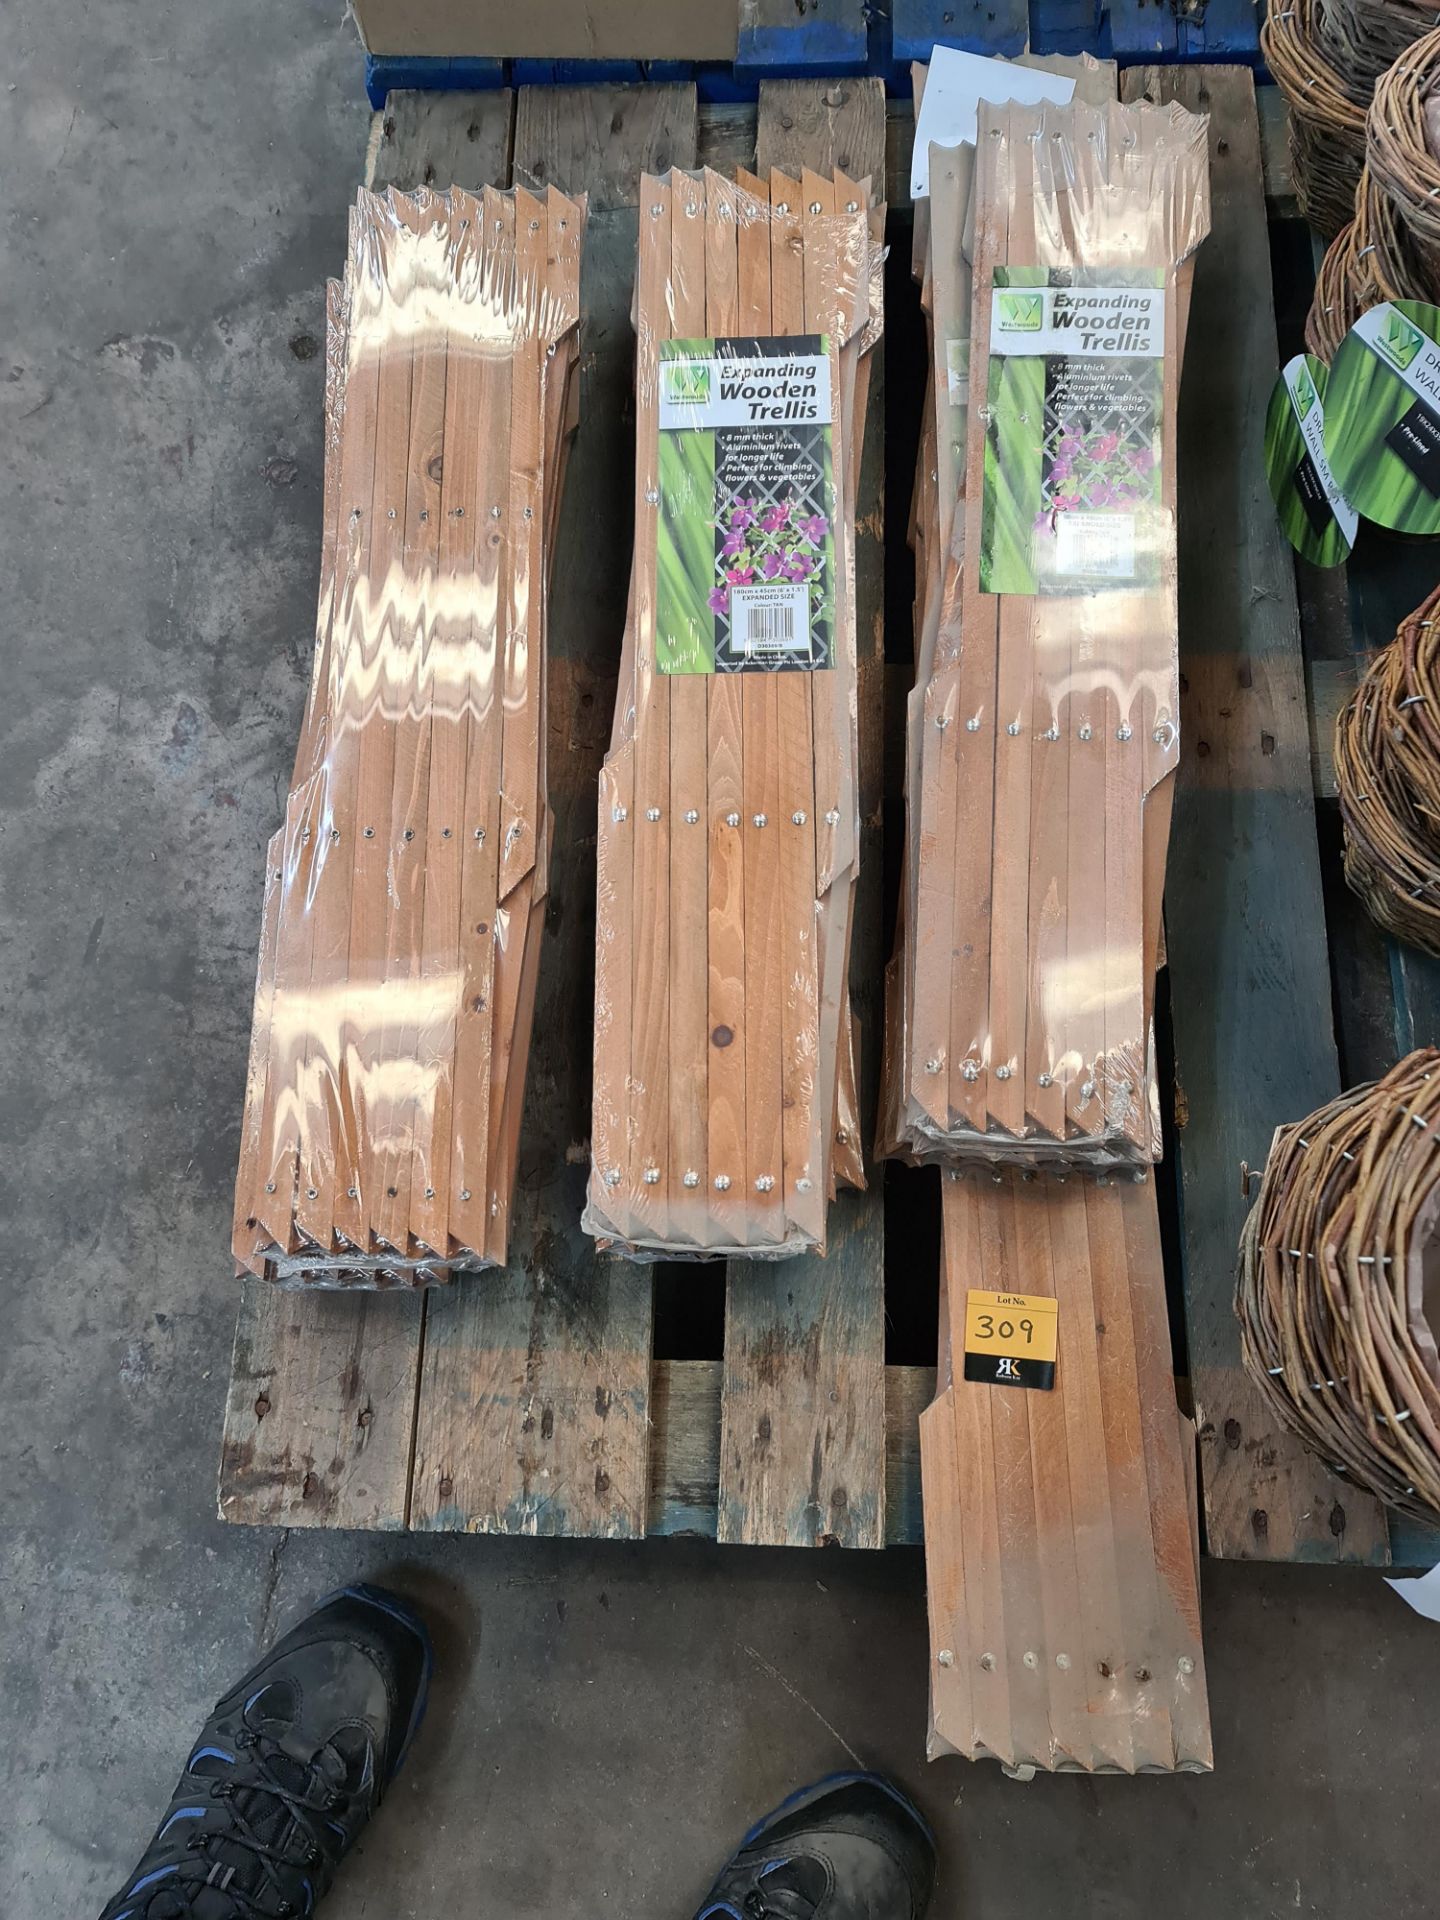 20 expanding wooden trellis